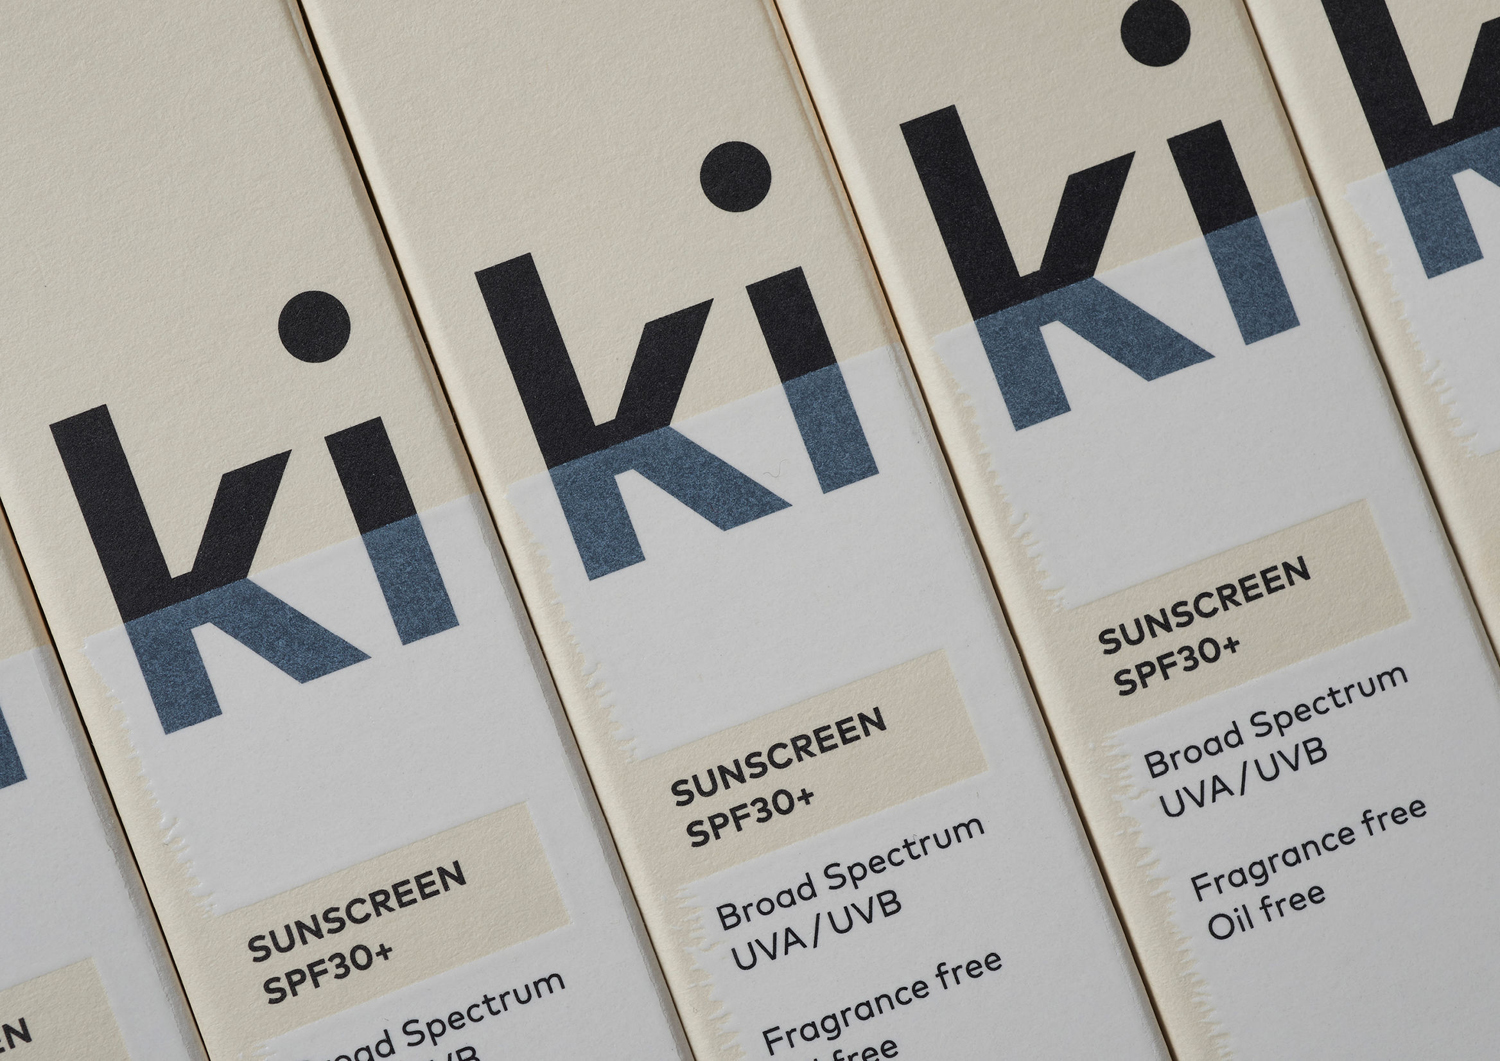 Packaging design by Aukland-based studio Akin for New Zealand sunscreen brand Ki